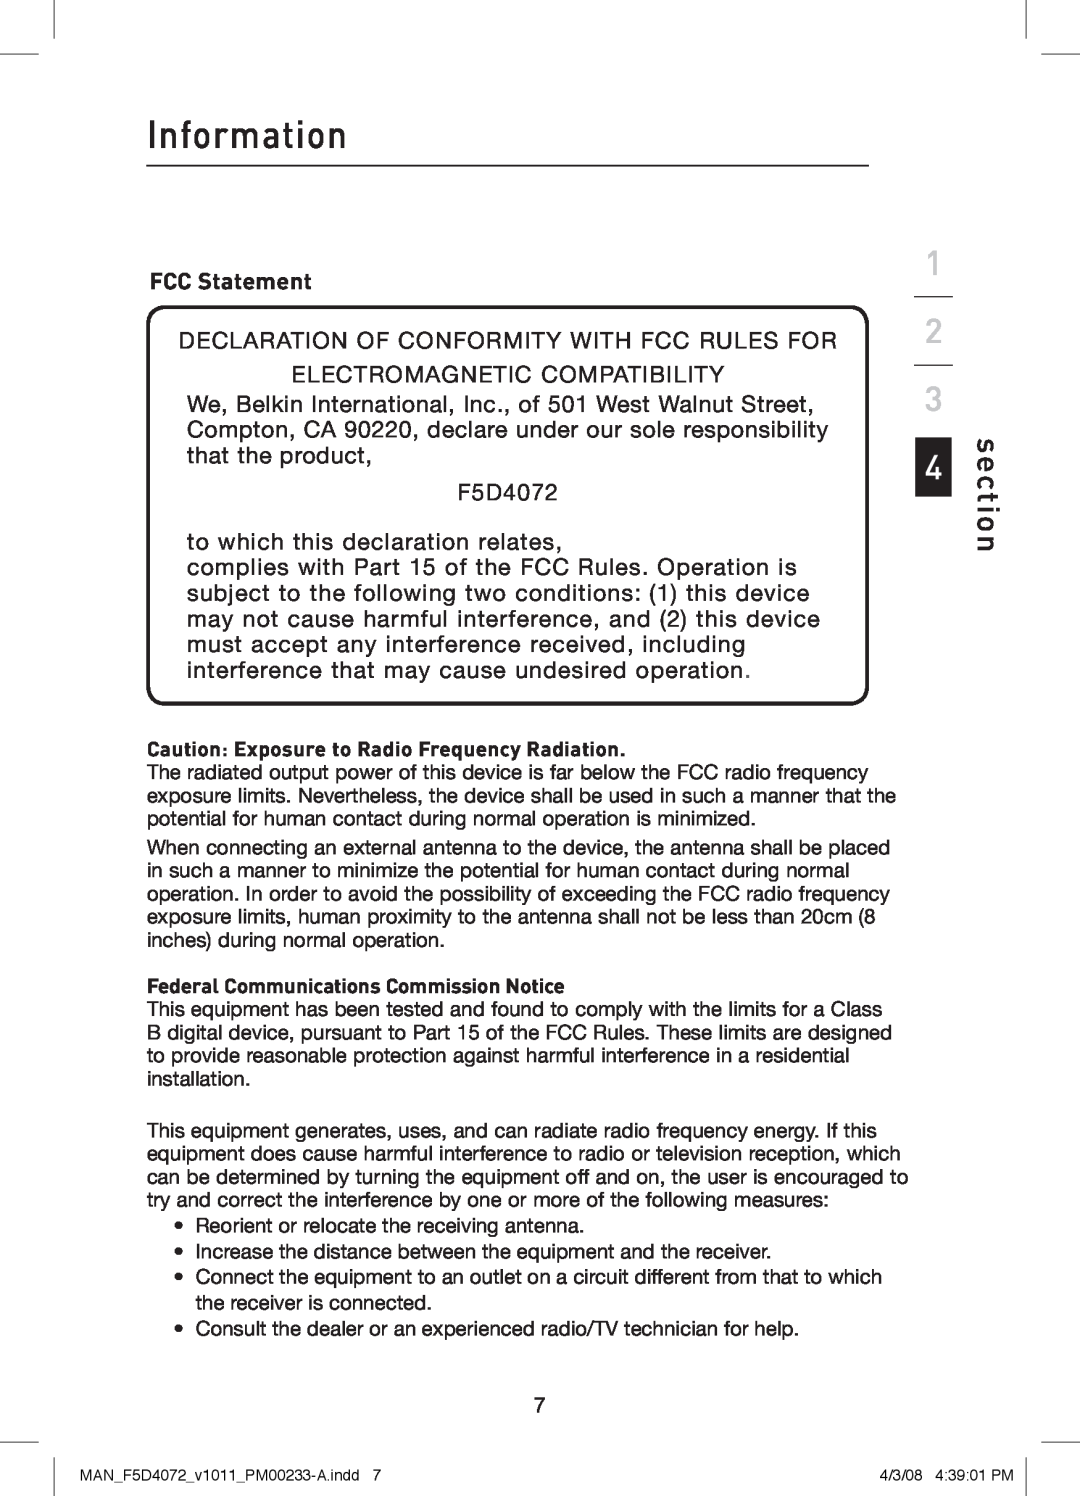 Belkin F5D4072 user manual FCC Statement, Information, section 